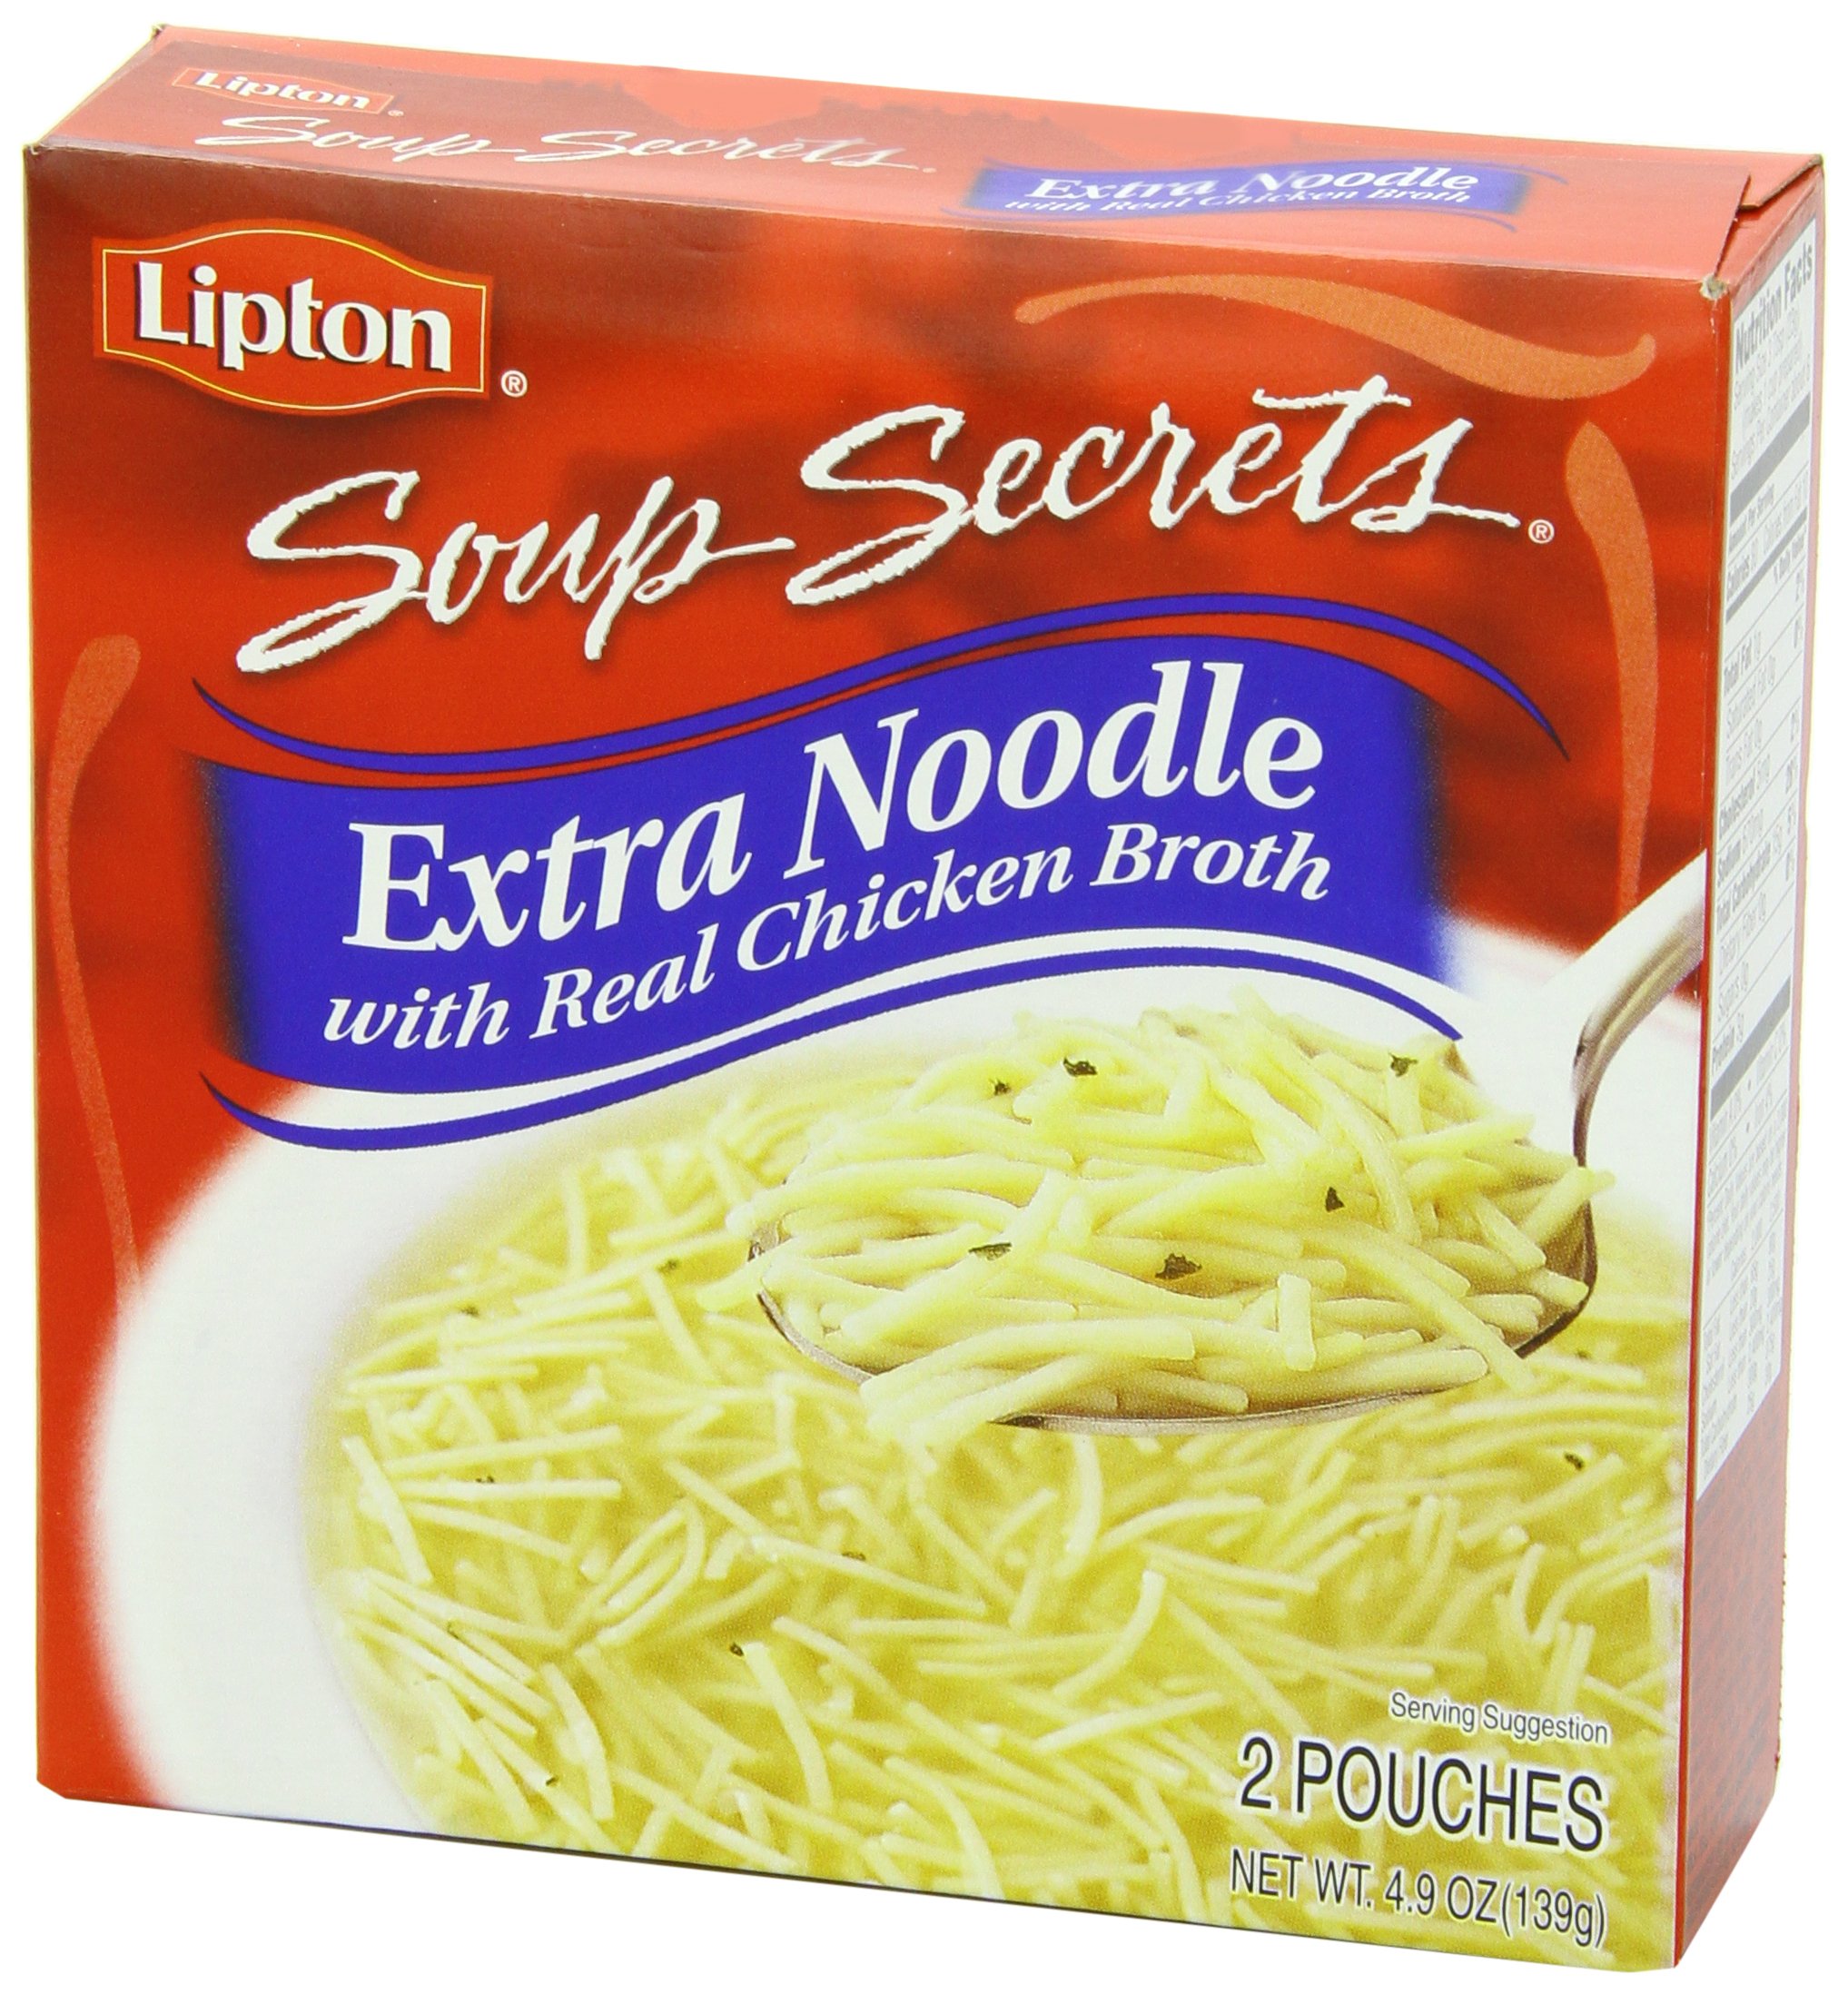 Lipton Soup Secrets Only $0.44 at Target